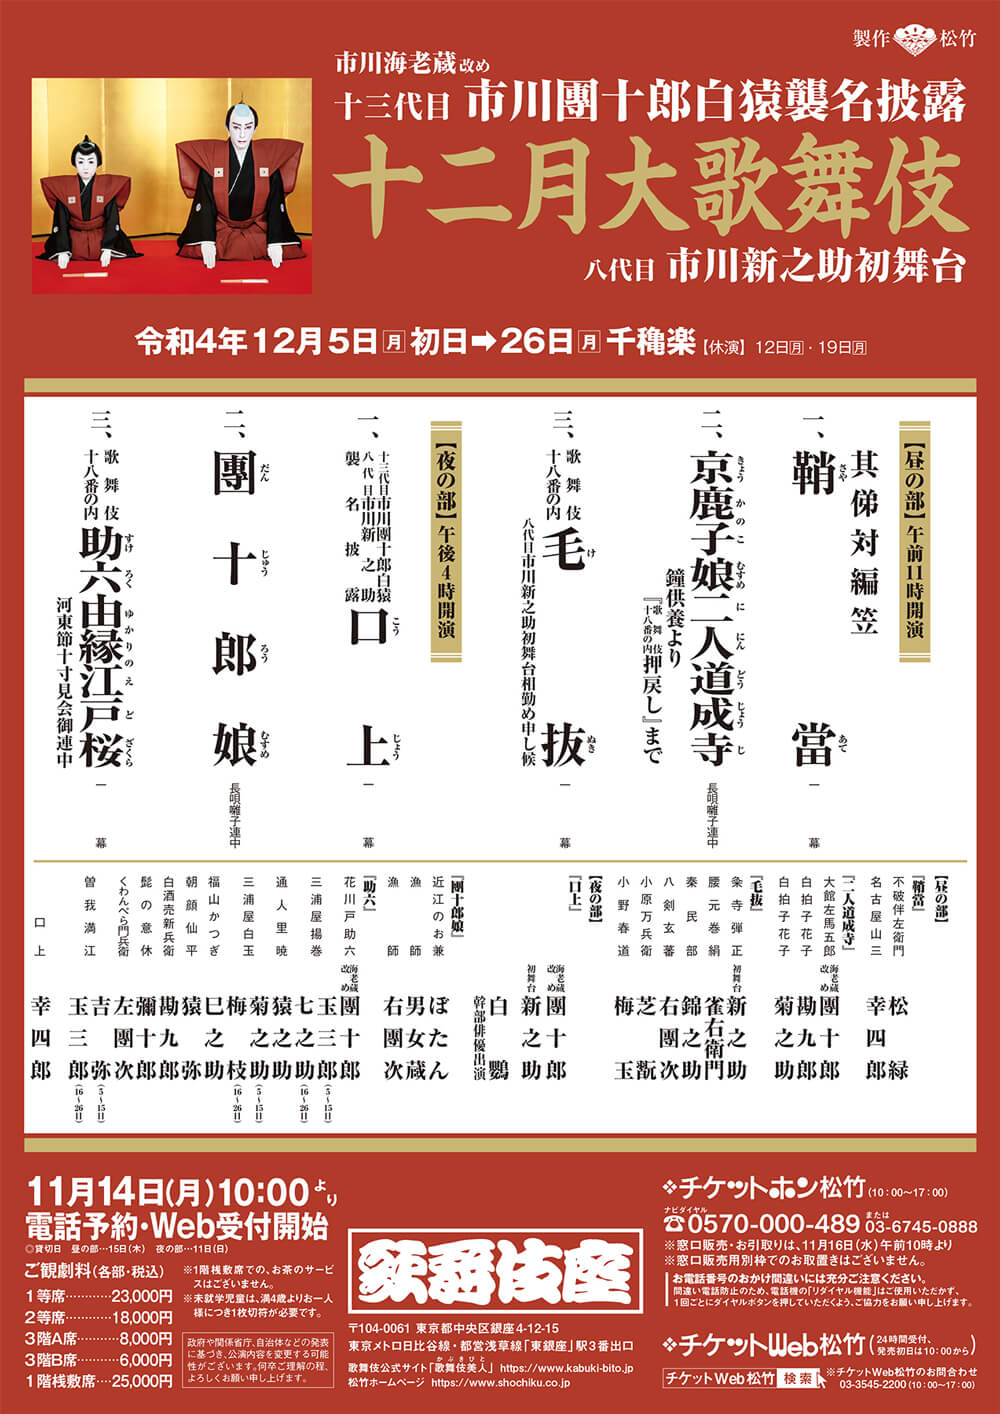 December Program at the Kabukiza Theatre